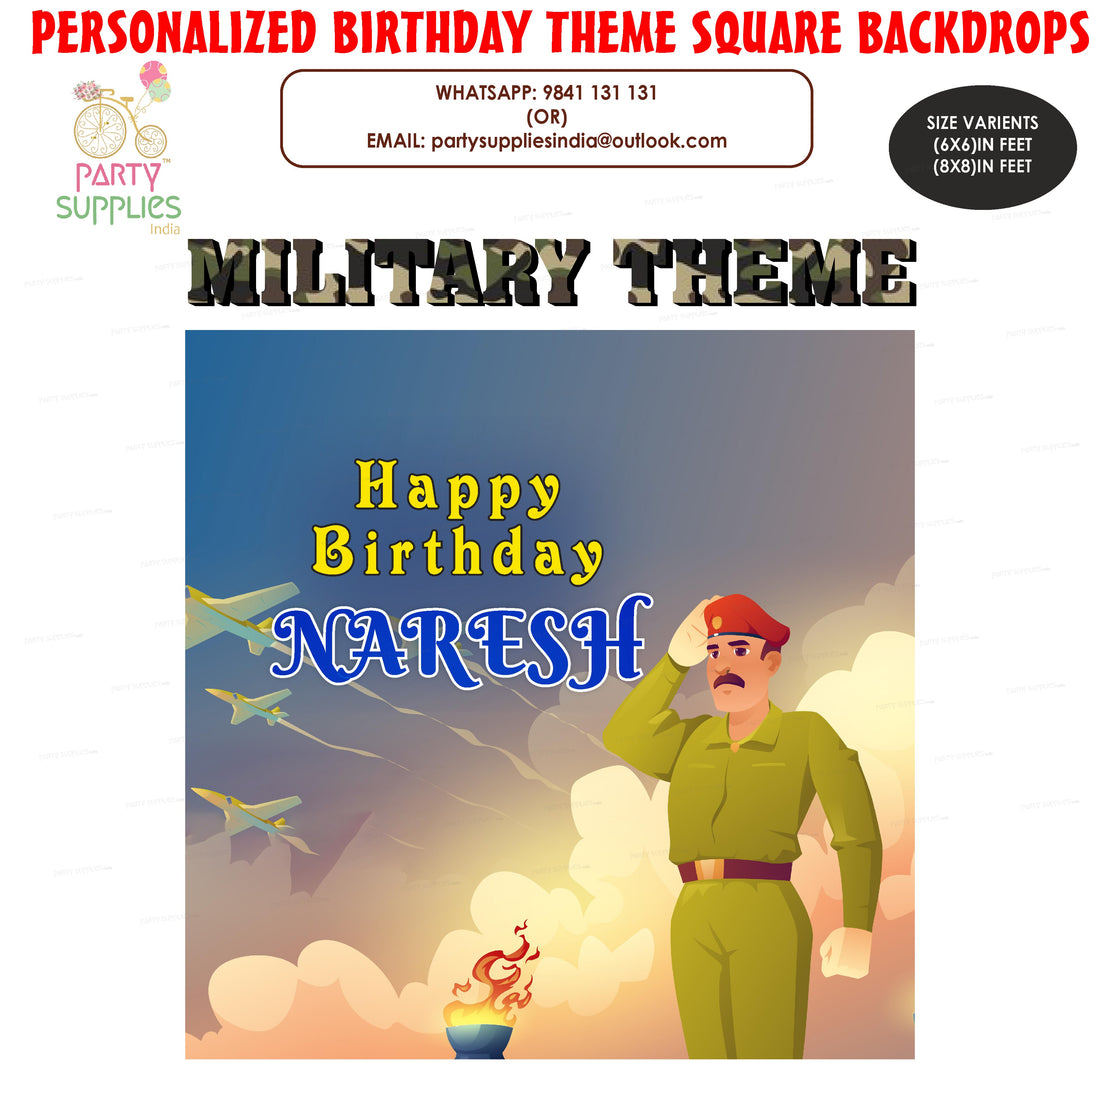 PSI Military Theme Customized Square Backdrop